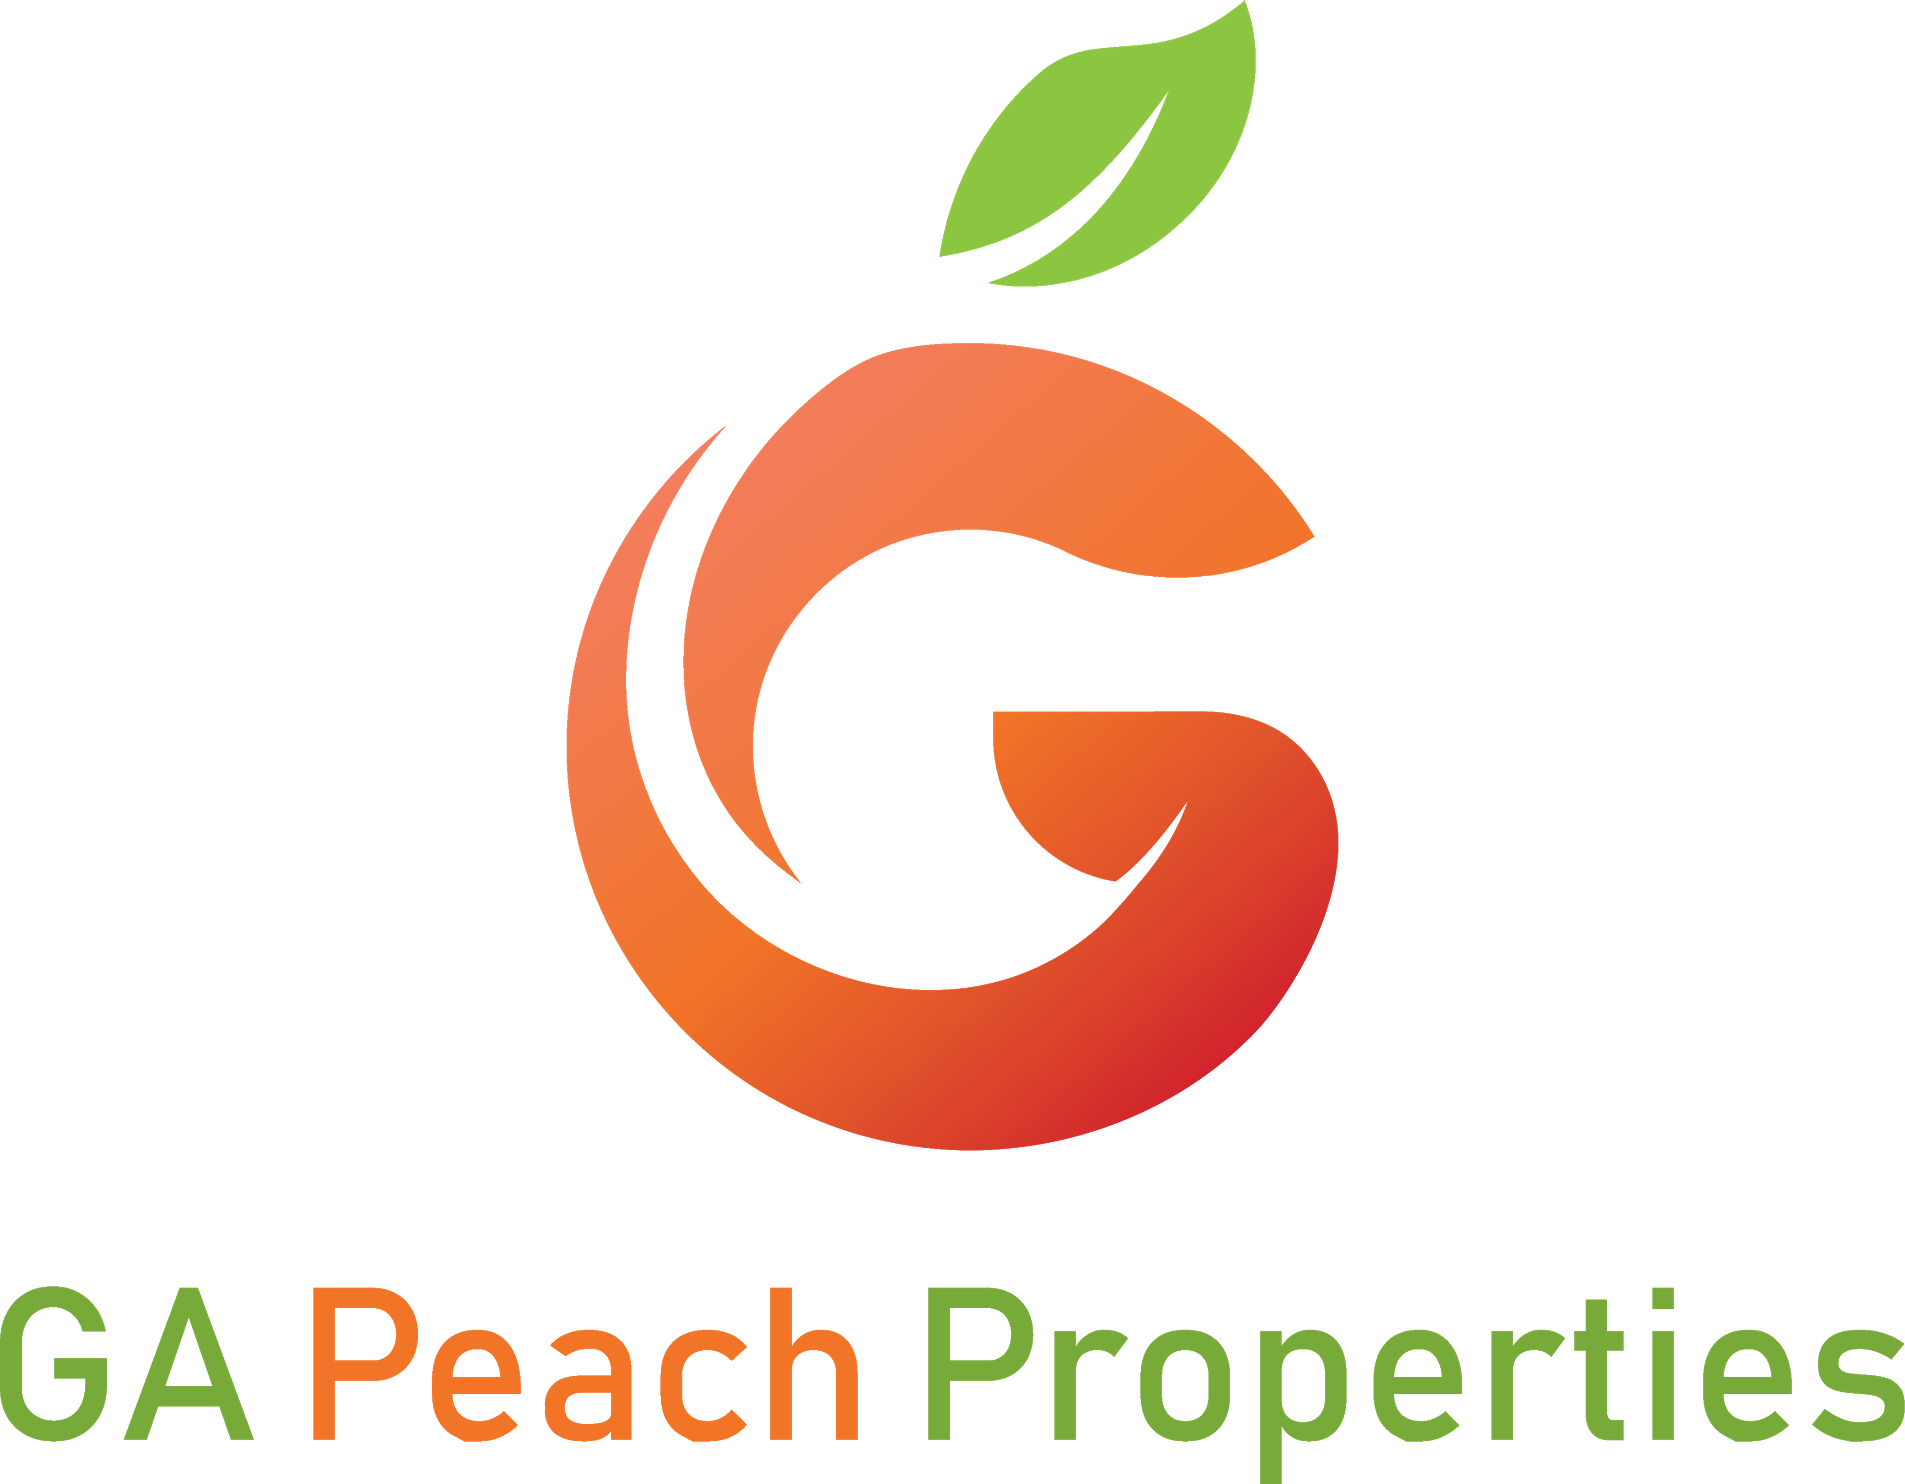 GA Peach Properties